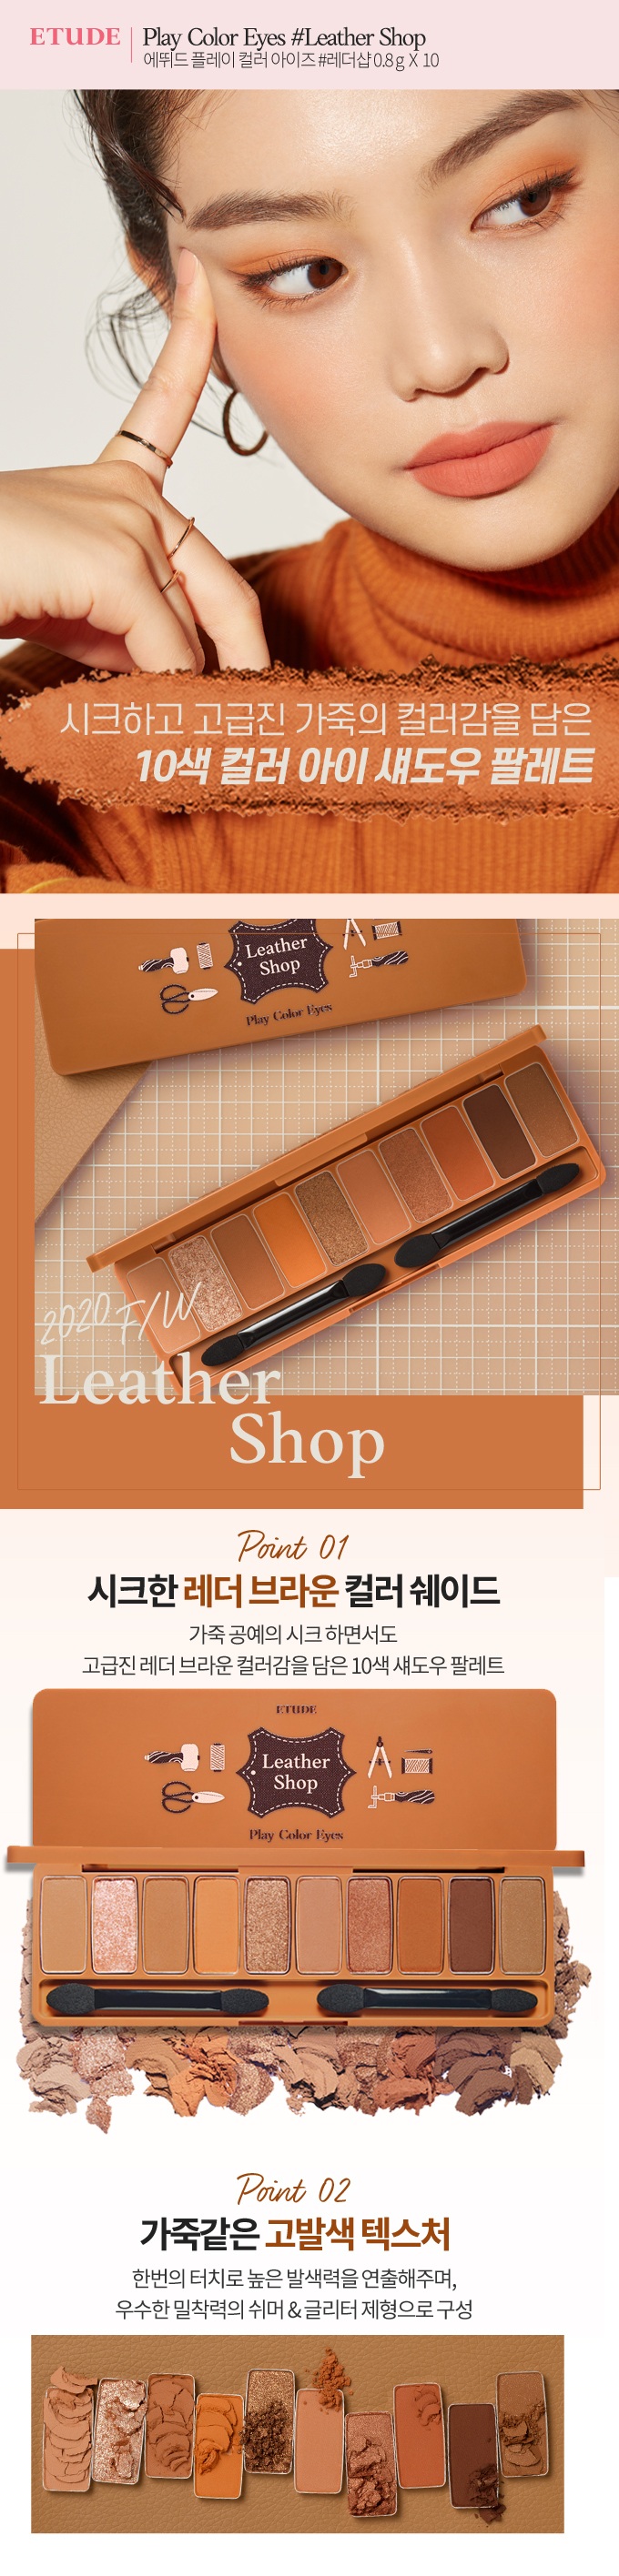 Etude House Play Color Eyes Mini Leather Shop korean cosmetic makeup product online shop malaysia macau thailand1